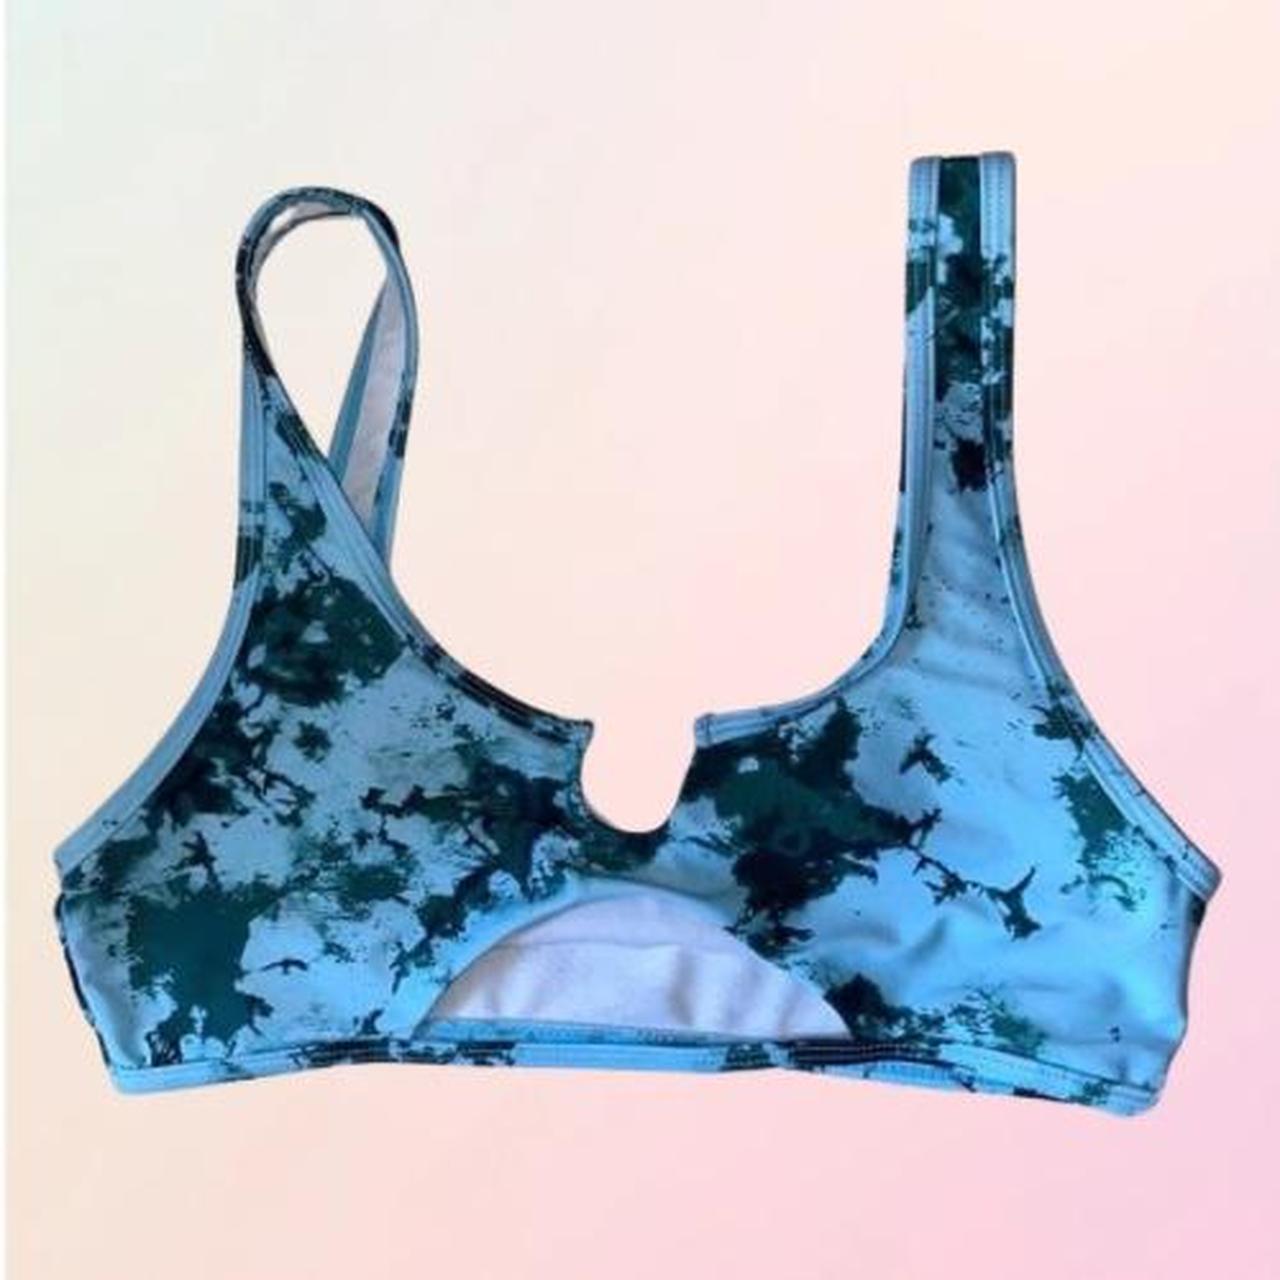 Product Image 1 - ZAFUL, Blue Marble Bikini Top,